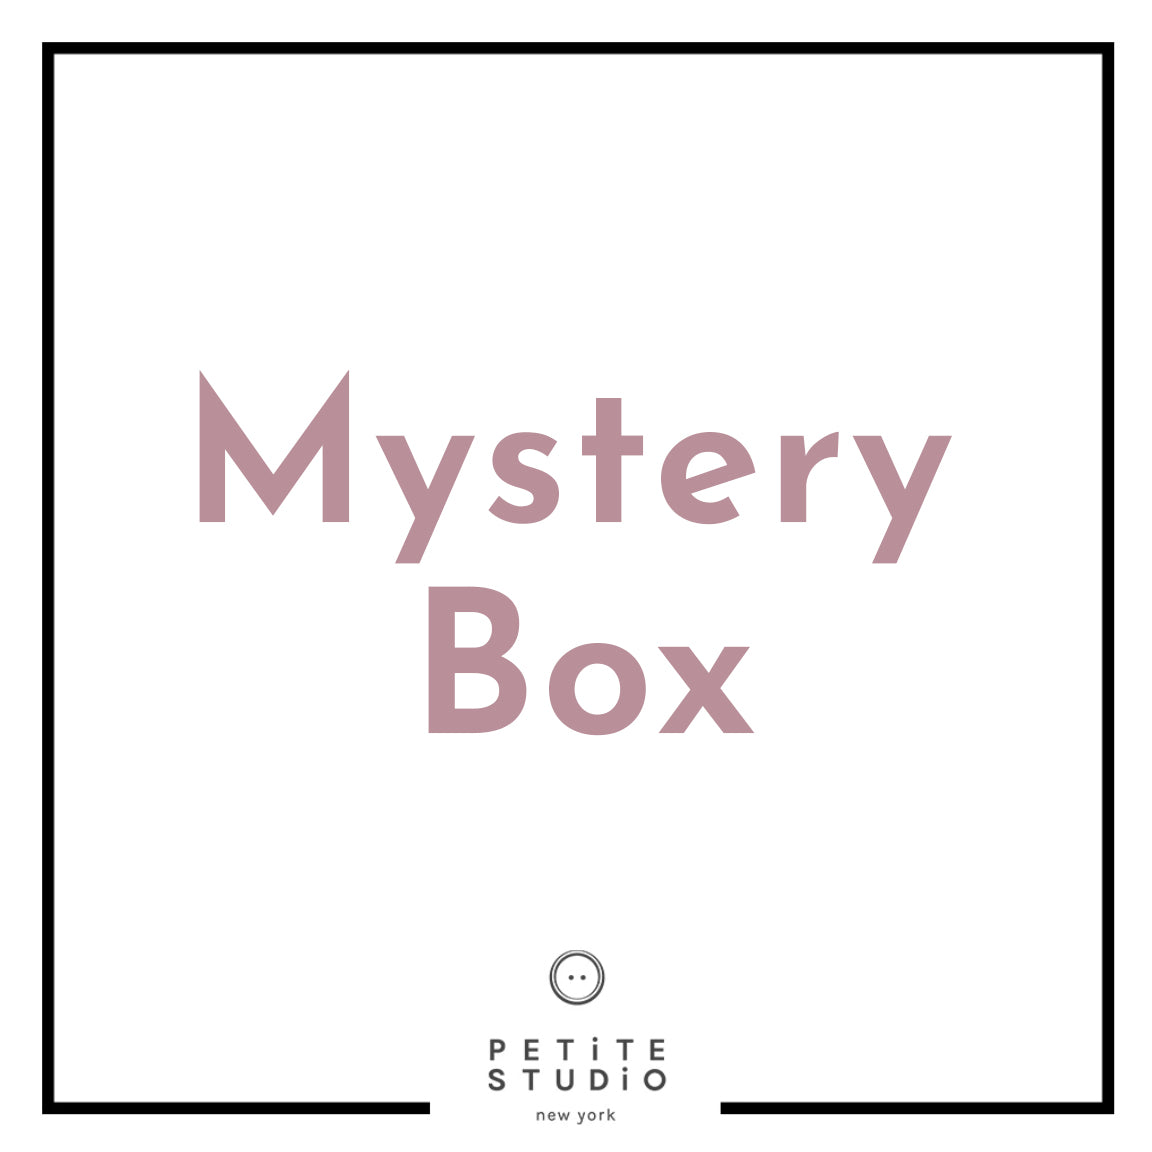 Petite Studio's Mystery Box